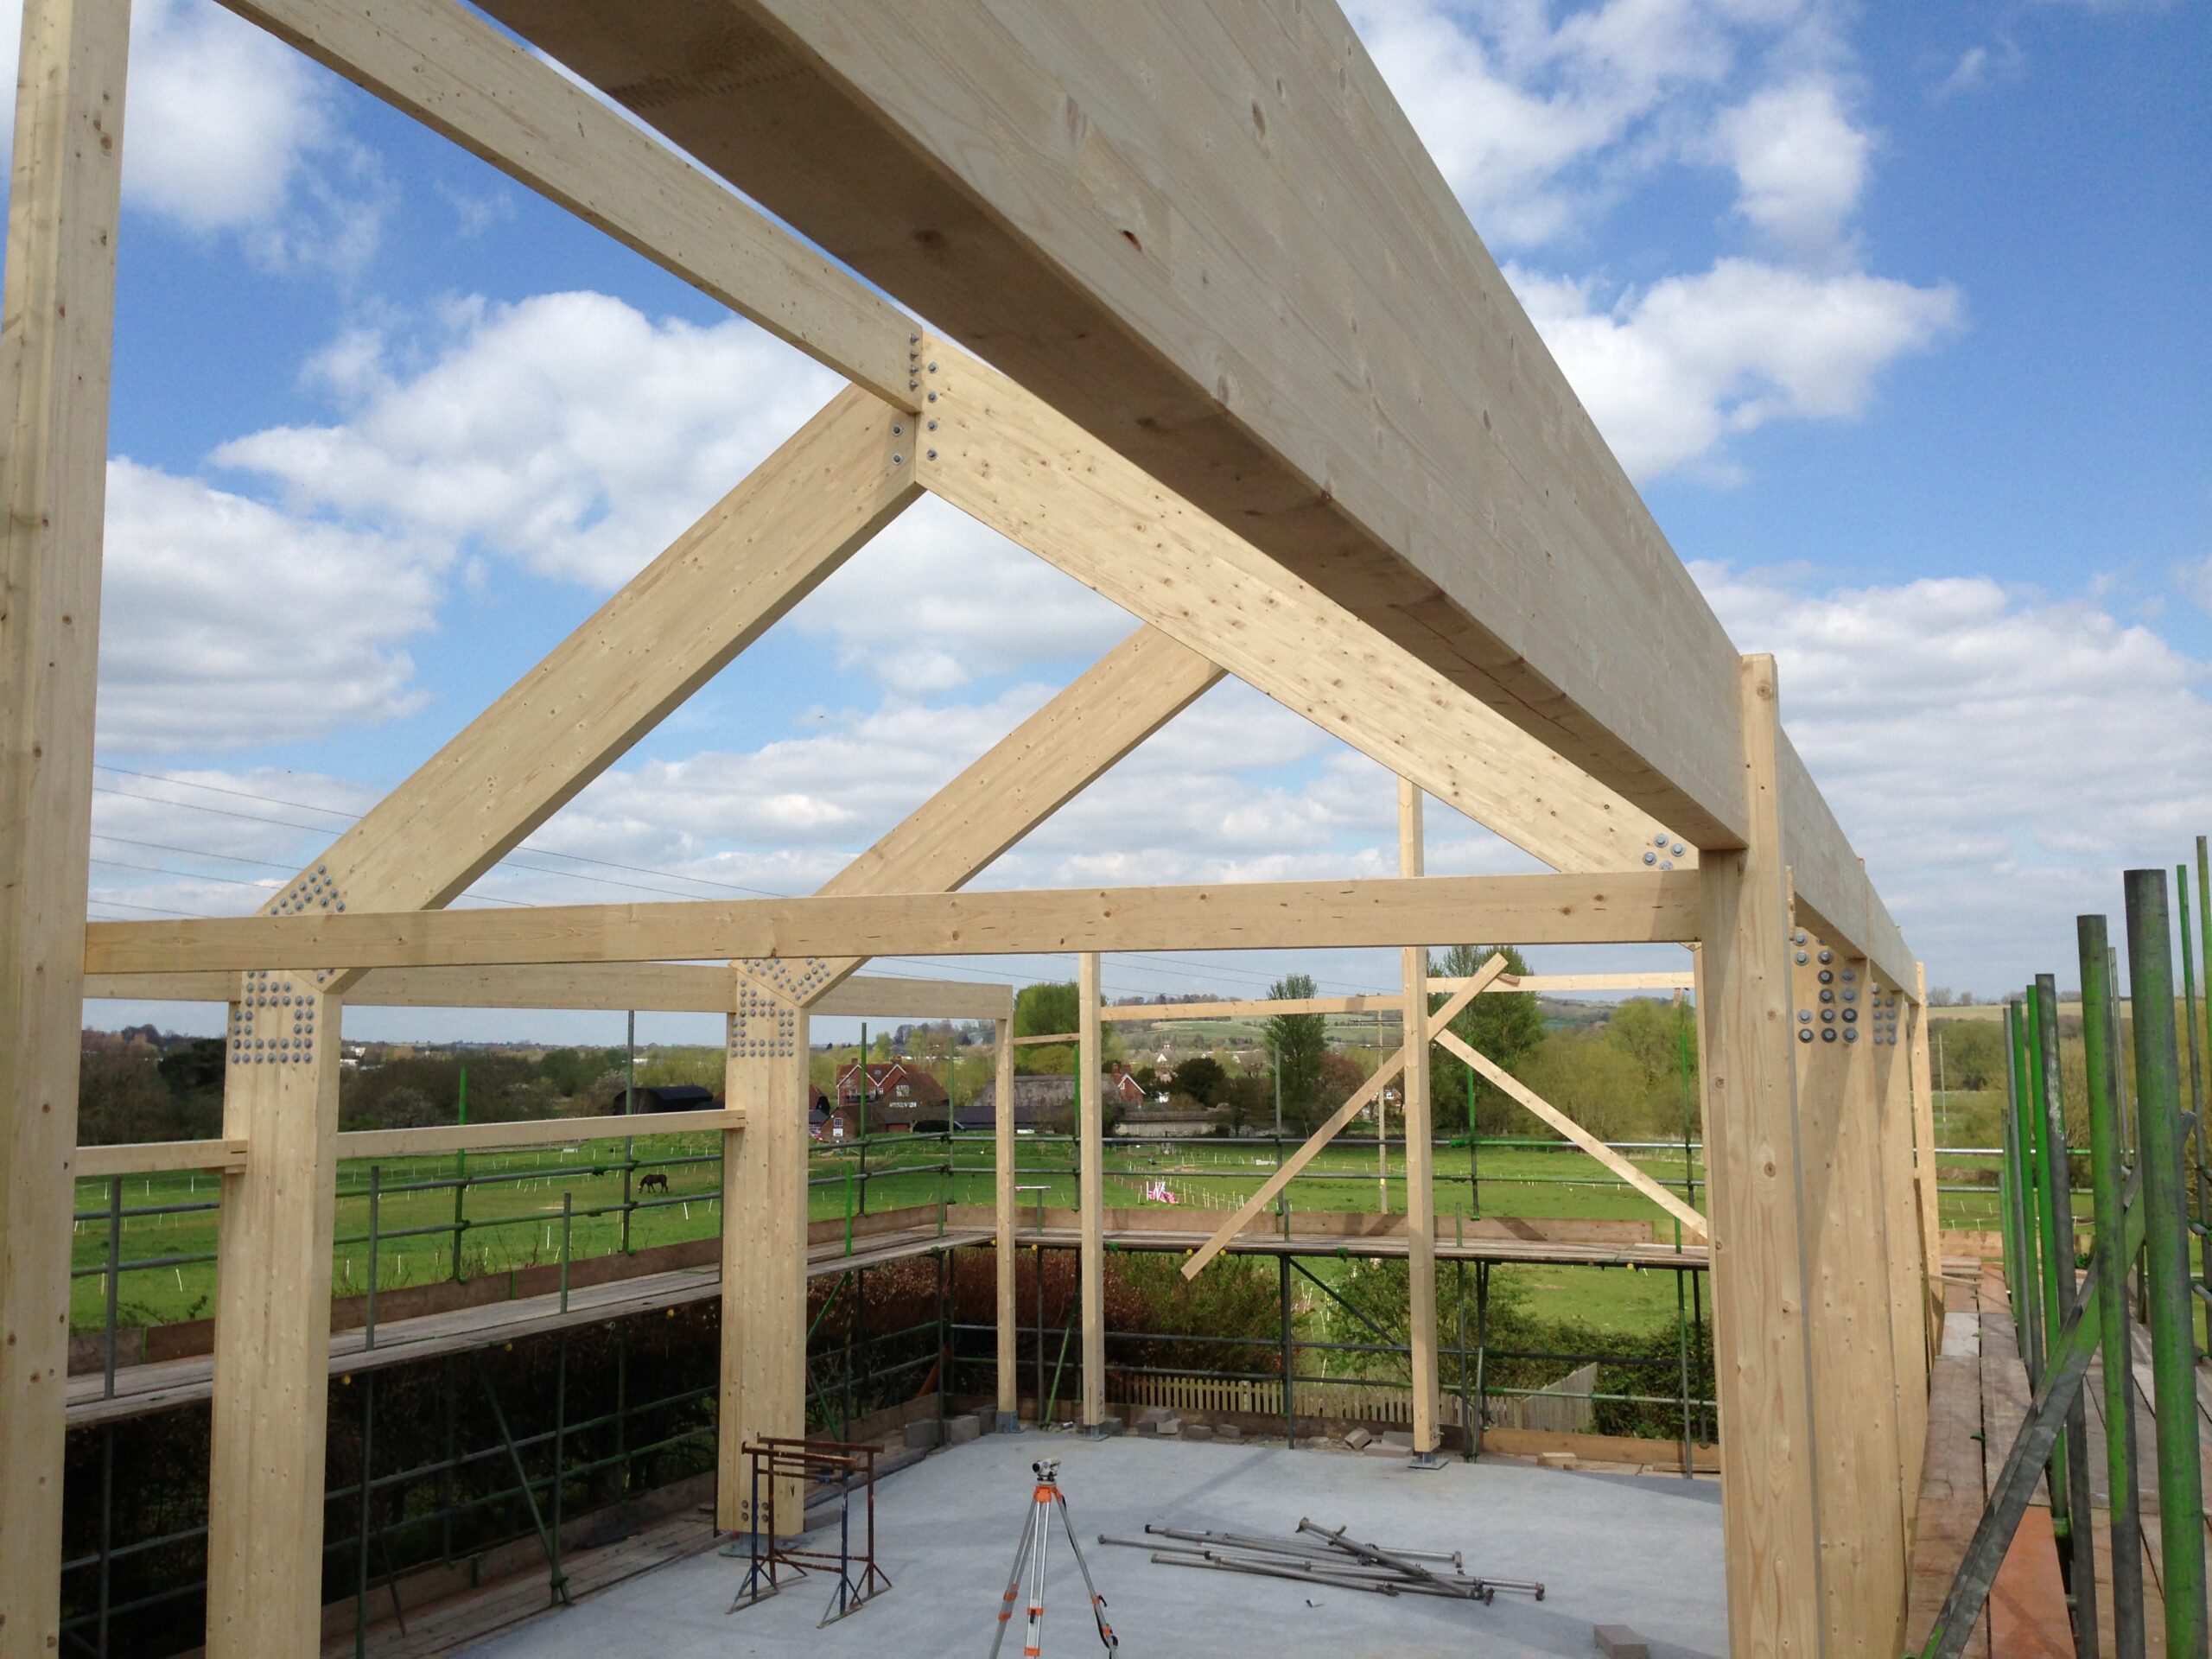 FrameTech Essex Ltd - Expert Timber Frame and Structural Carpentry